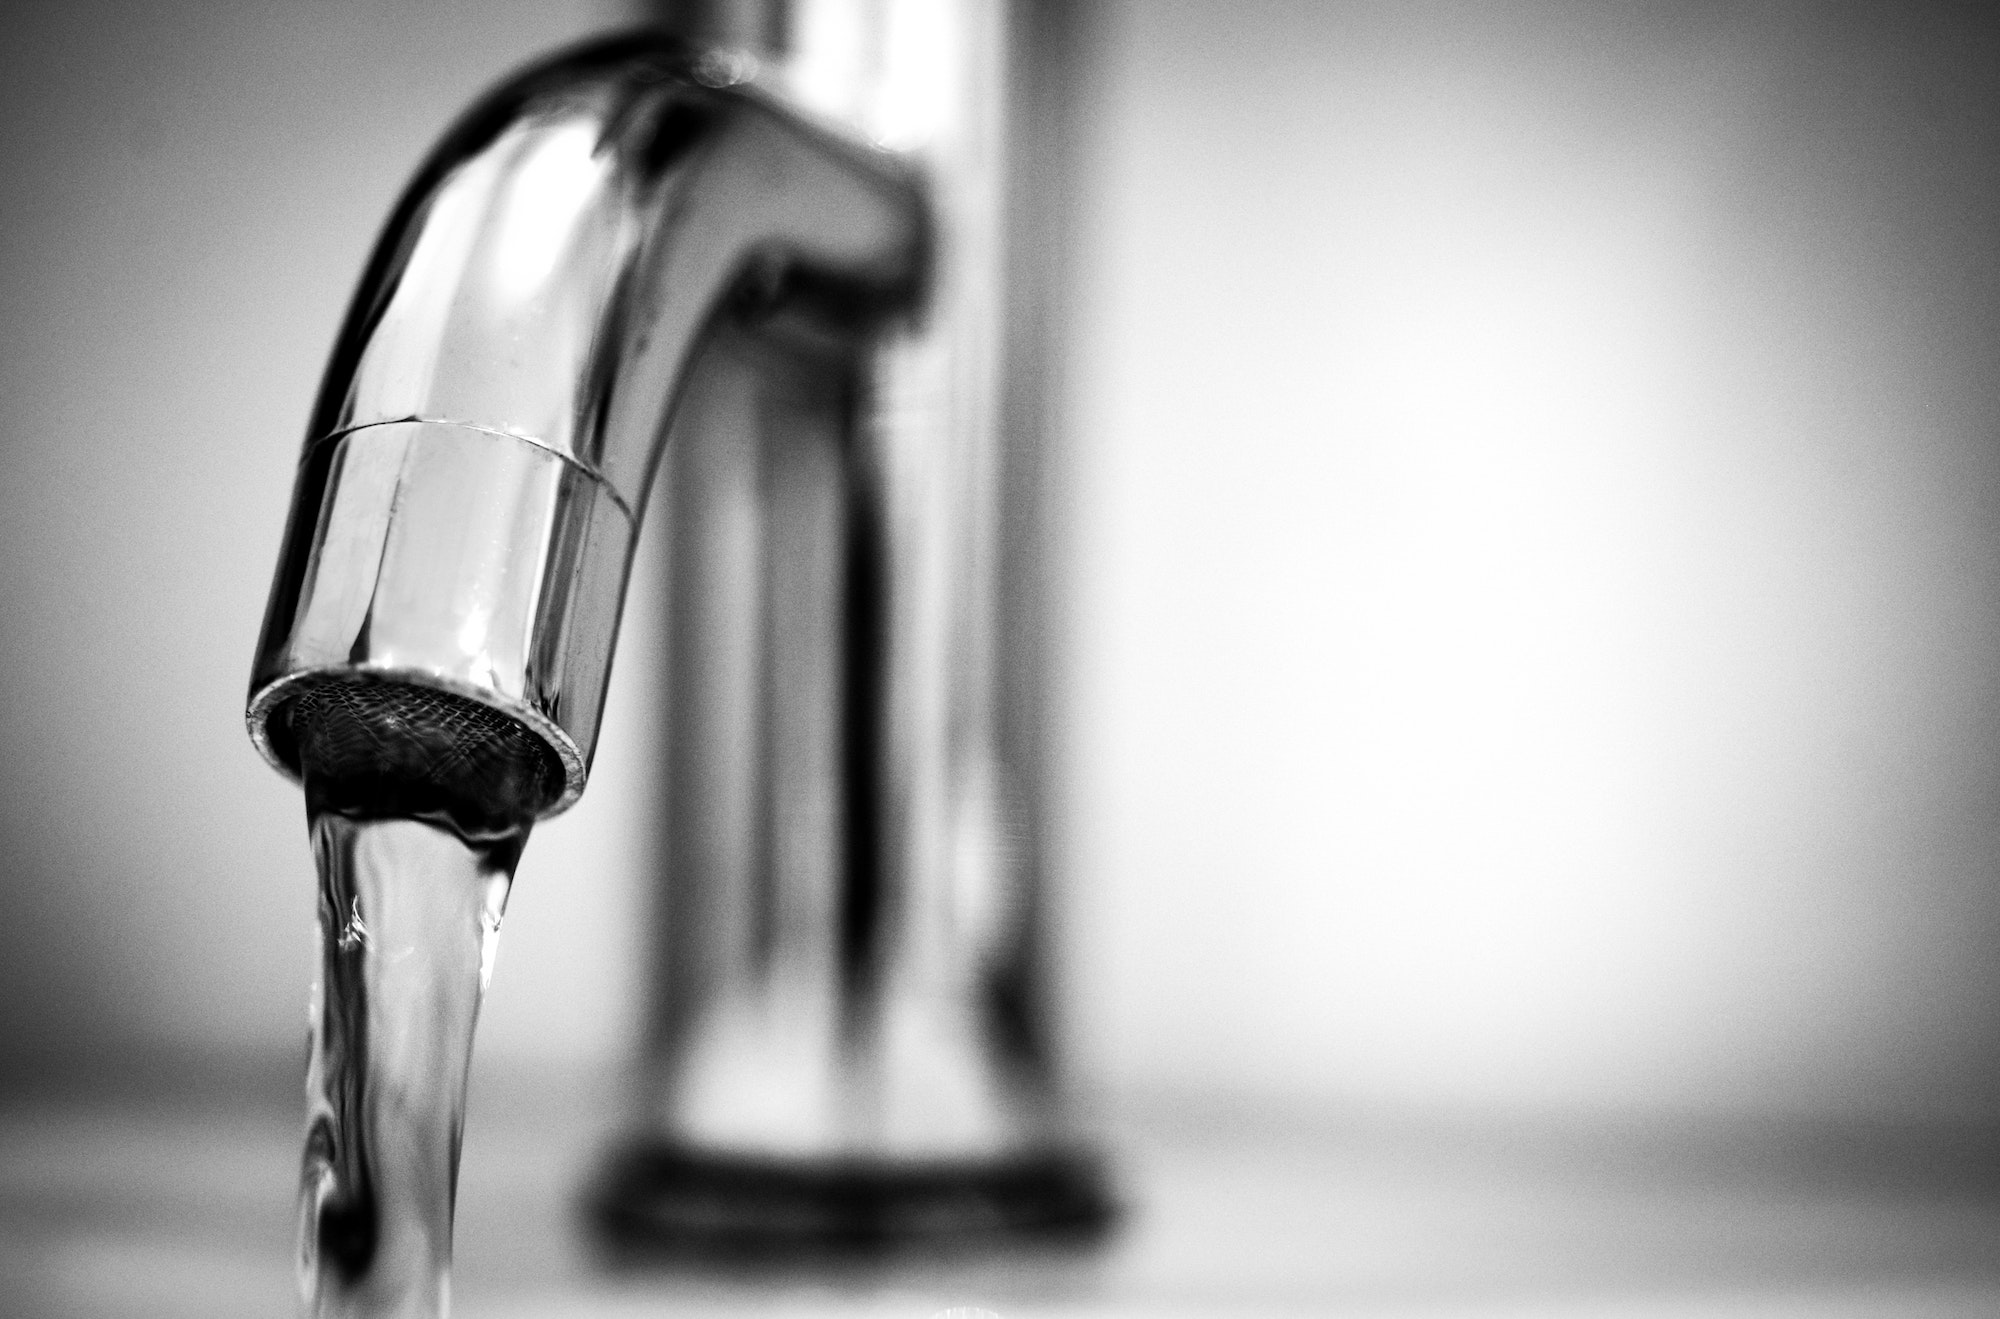 Water Faucet Maintenance